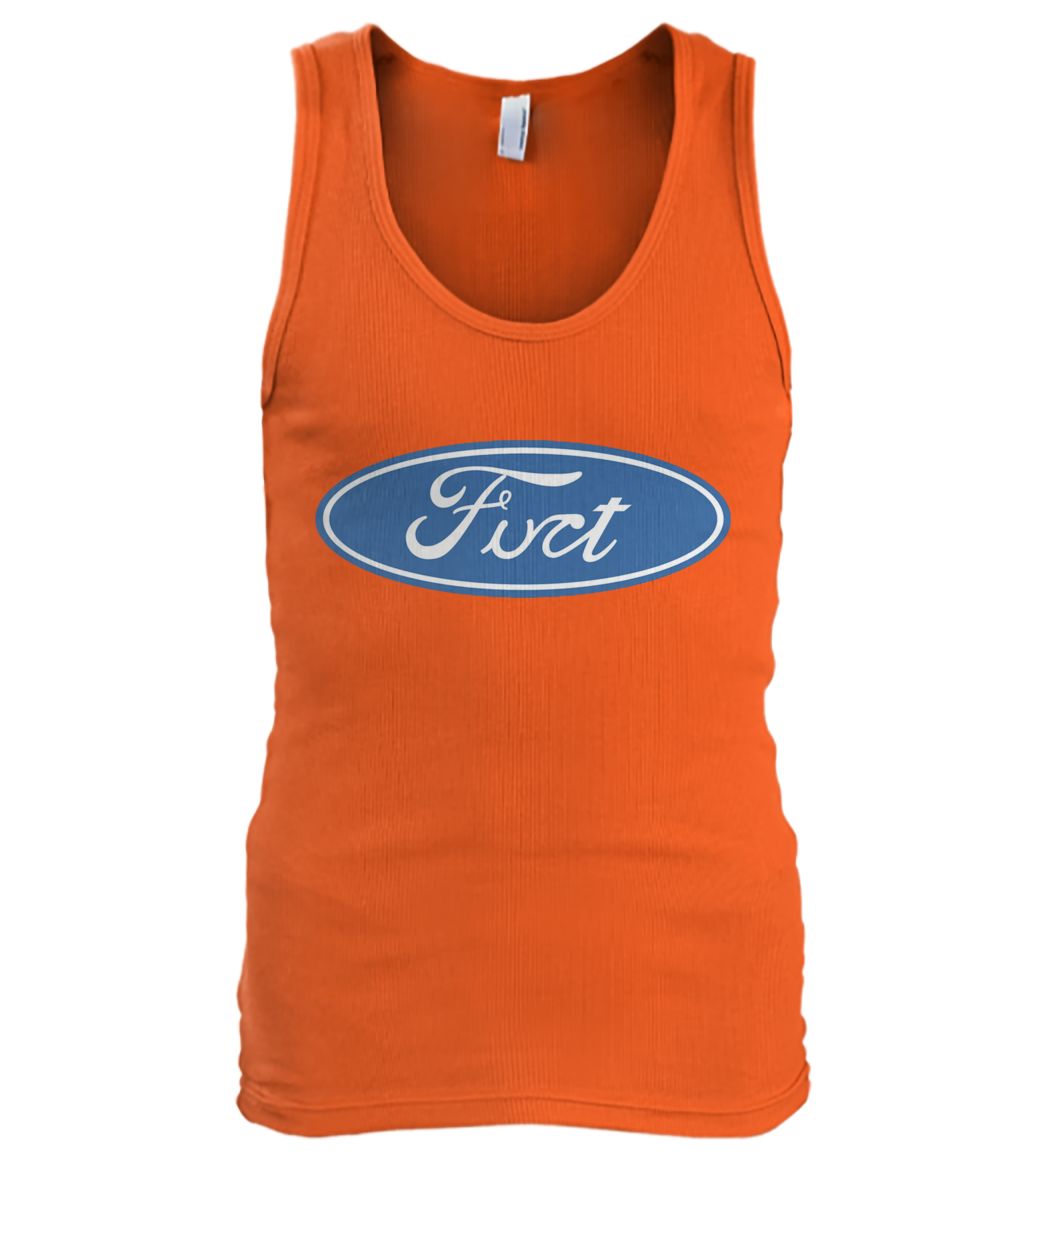 Fuct ford logo men's tank top